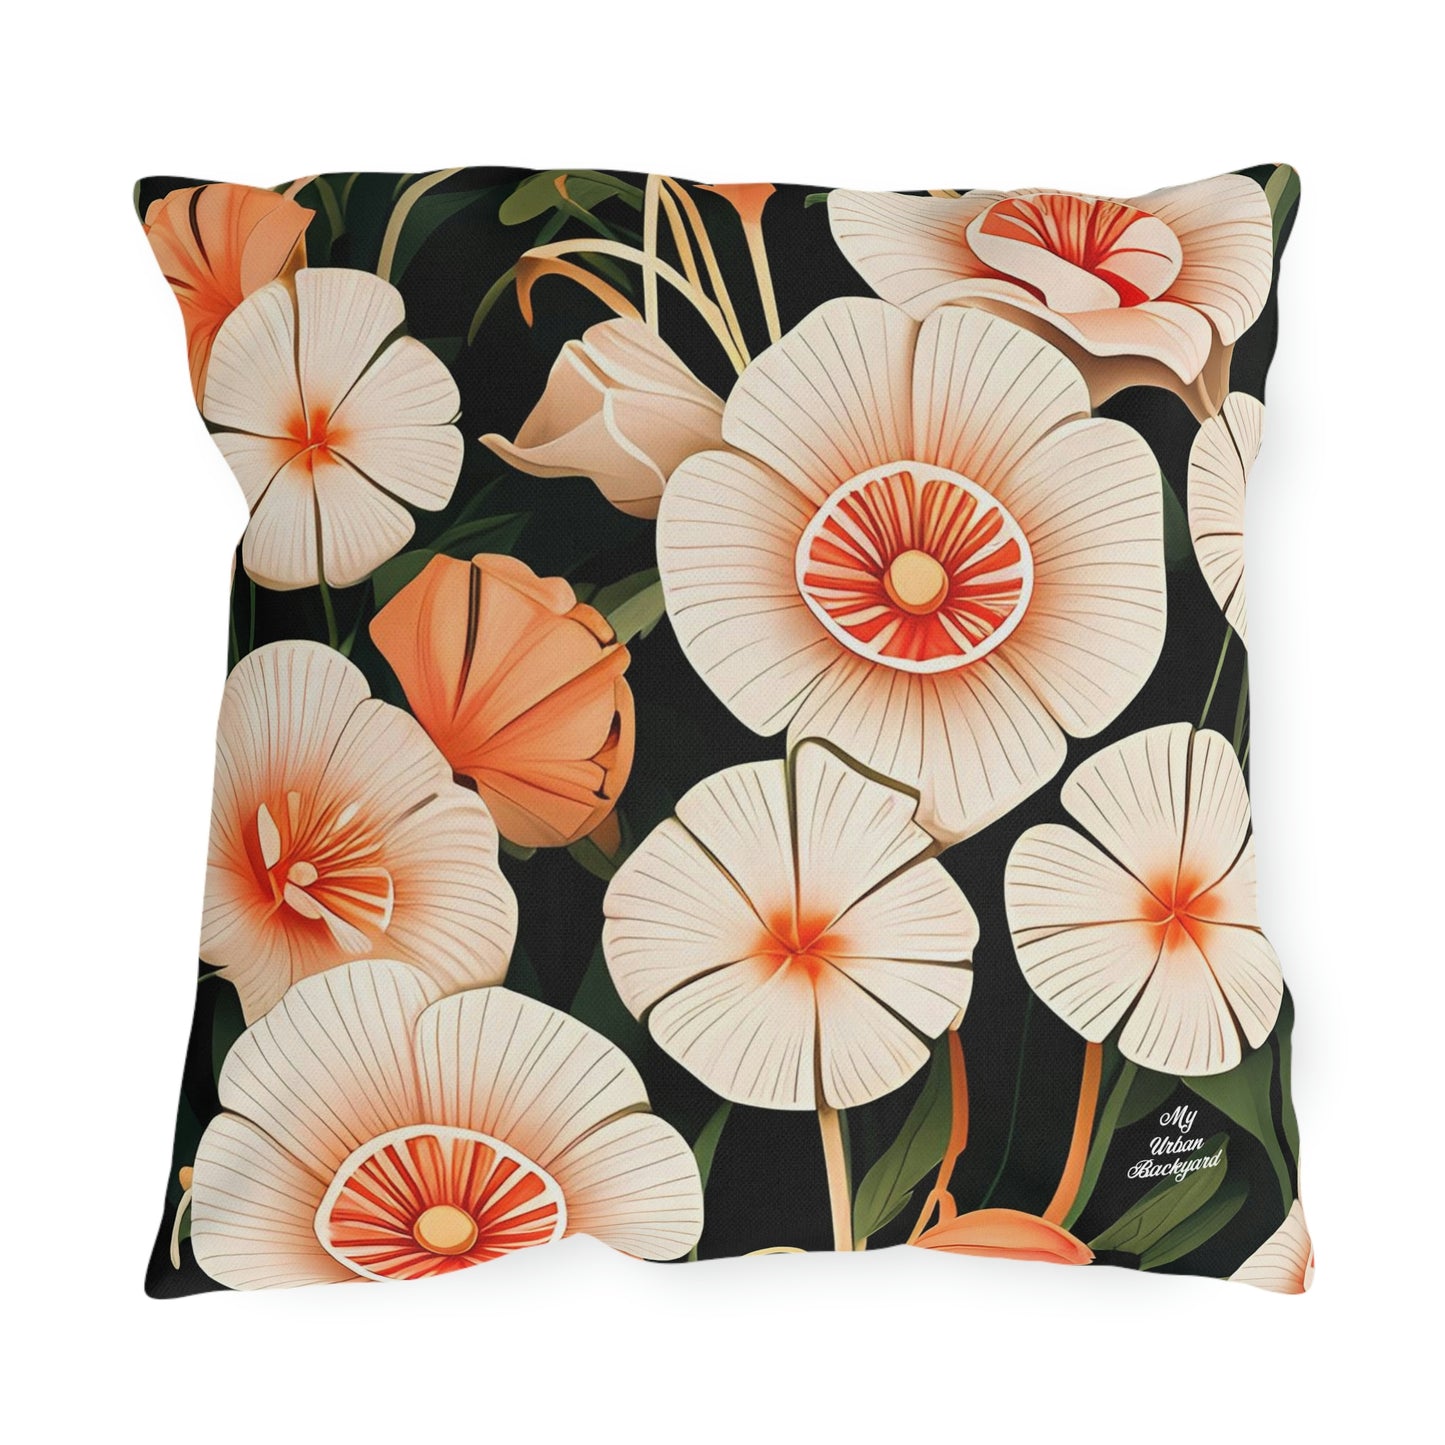 Art Deco Flowers, Versatile Throw Pillow - Home or Office Decor